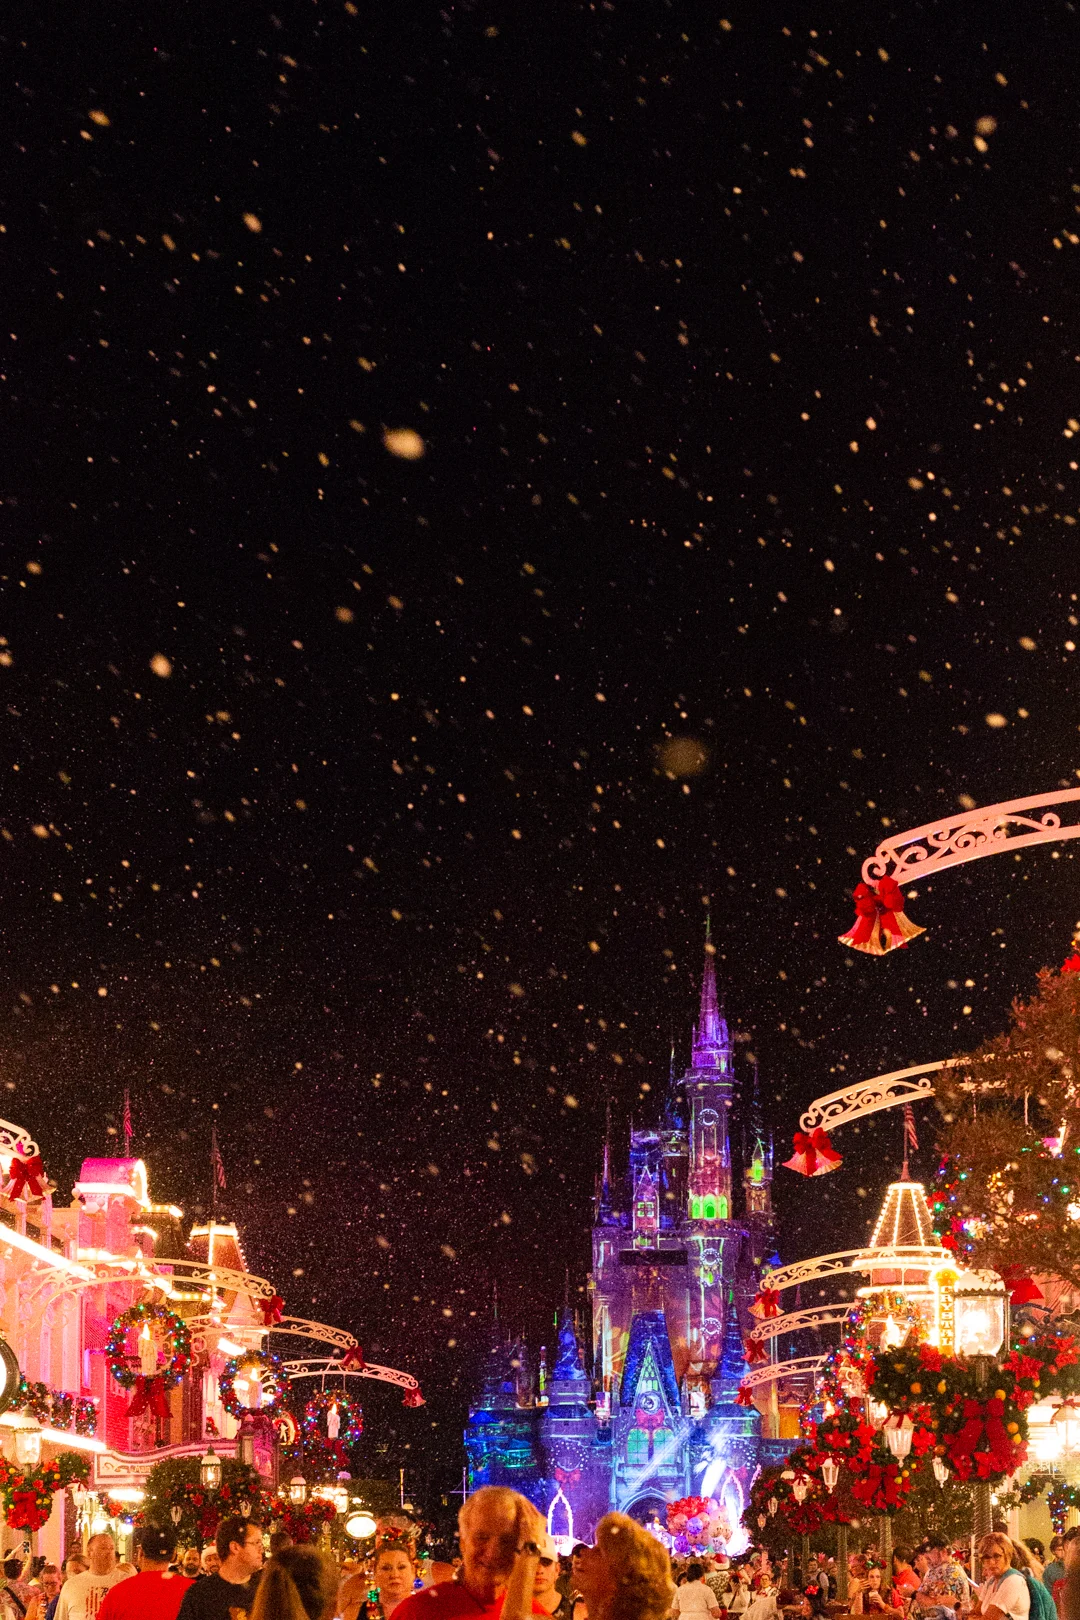 Cinderella's Castle at Walt Disney World at night.